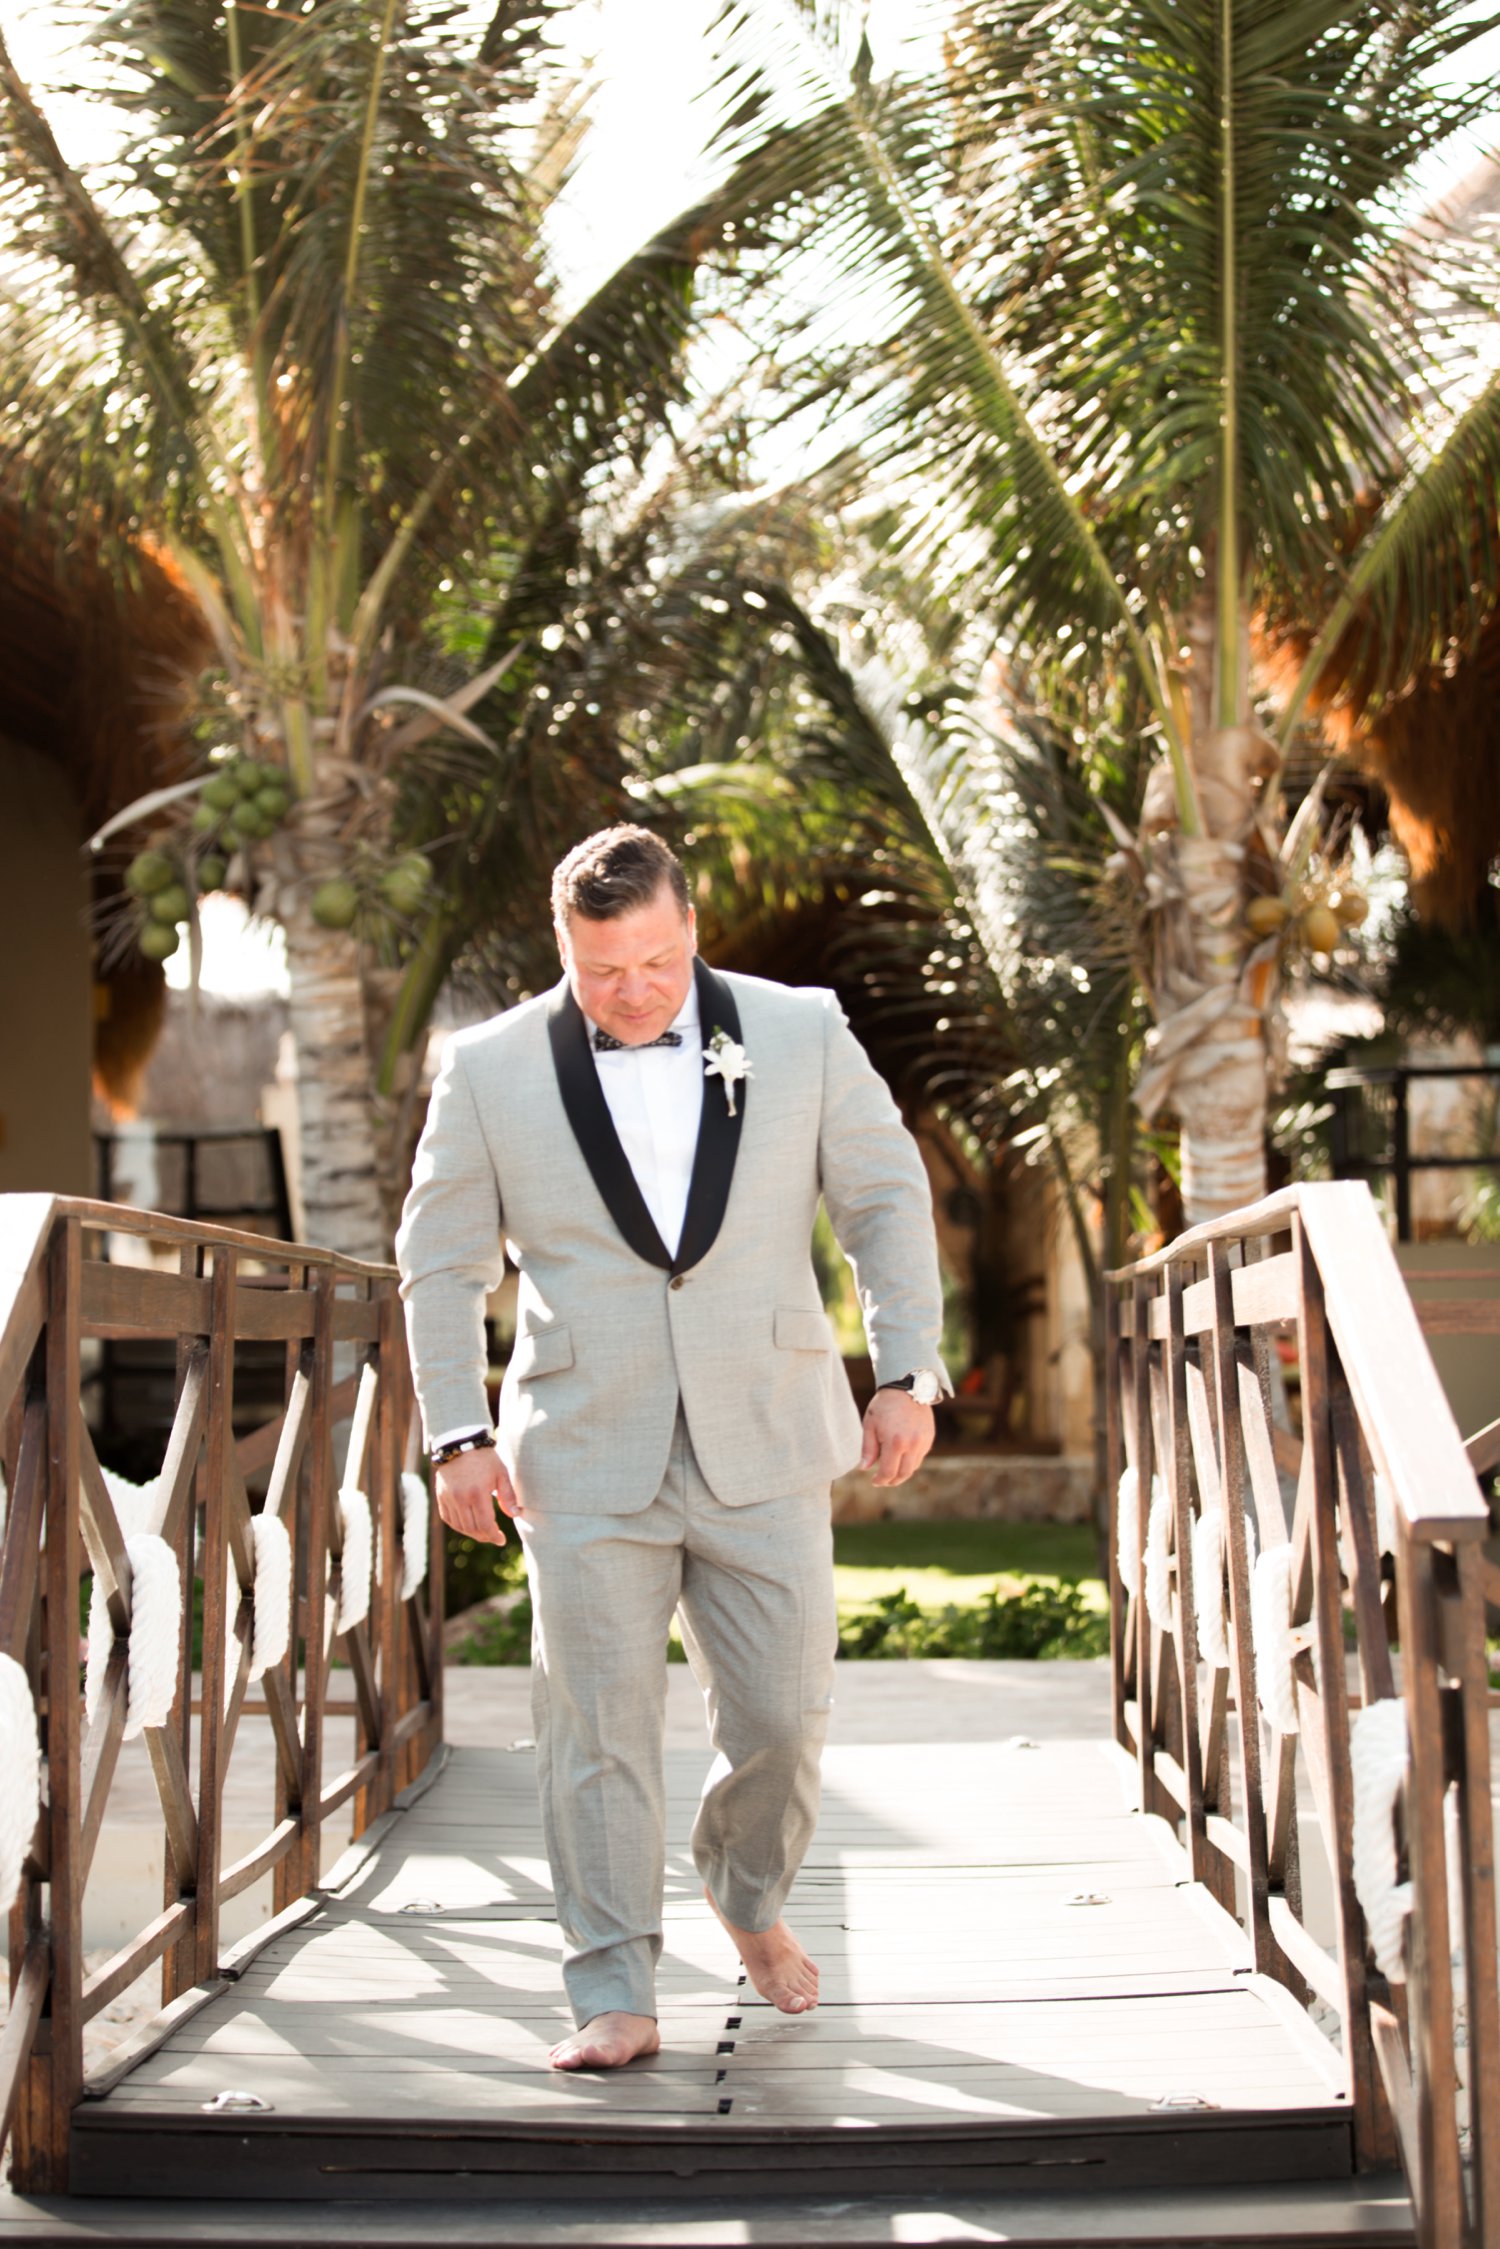  images by feliciathephotographer.com | destination wedding photographer | mexico | tropical | fiji | venue | azul beach resort | riviera maya | groom | ceremony | walking down the aisle | barefoot | grey suit | bow tie | palm trees | 